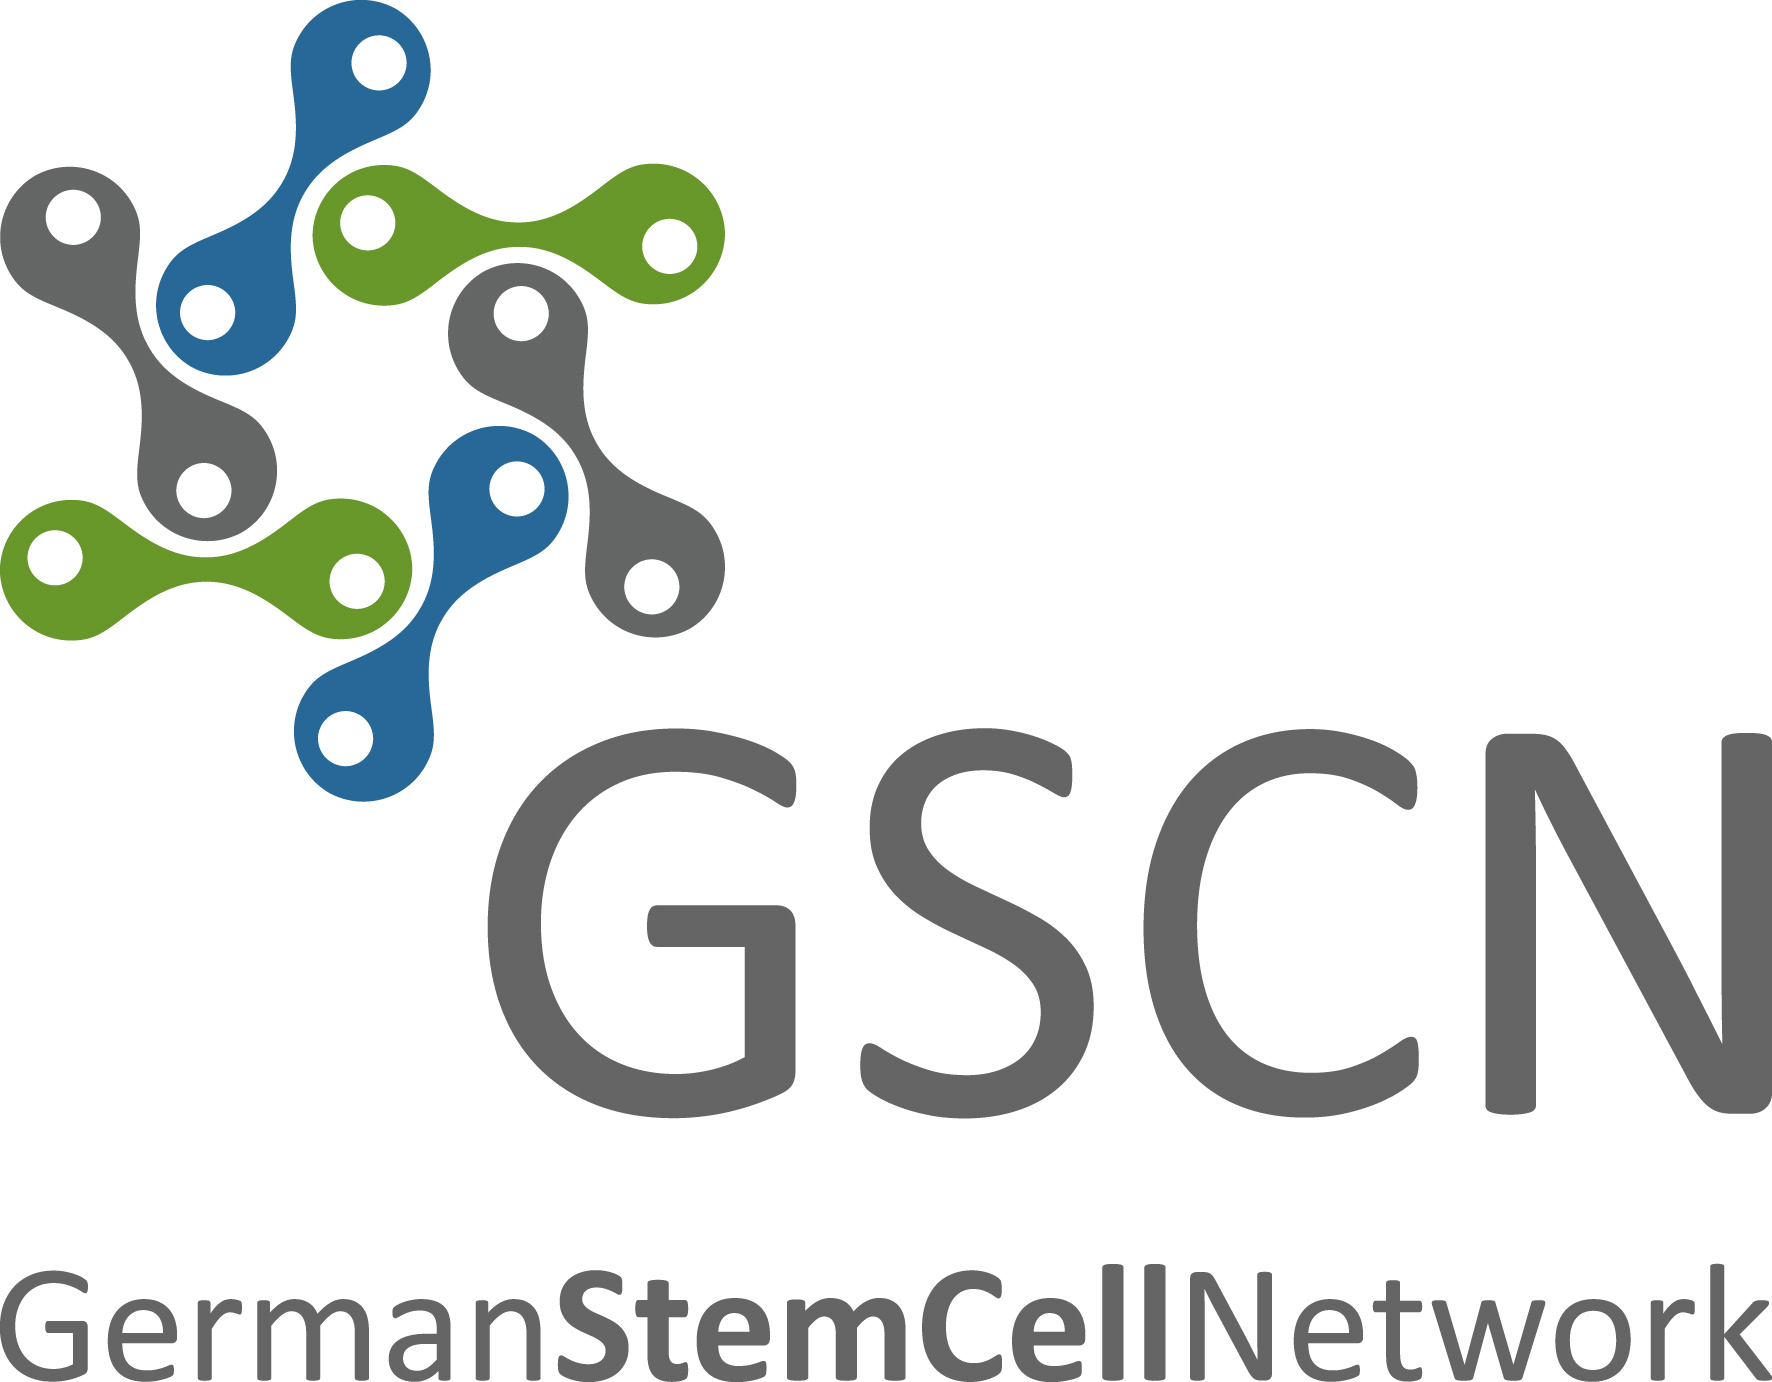 German Stem Cell Network